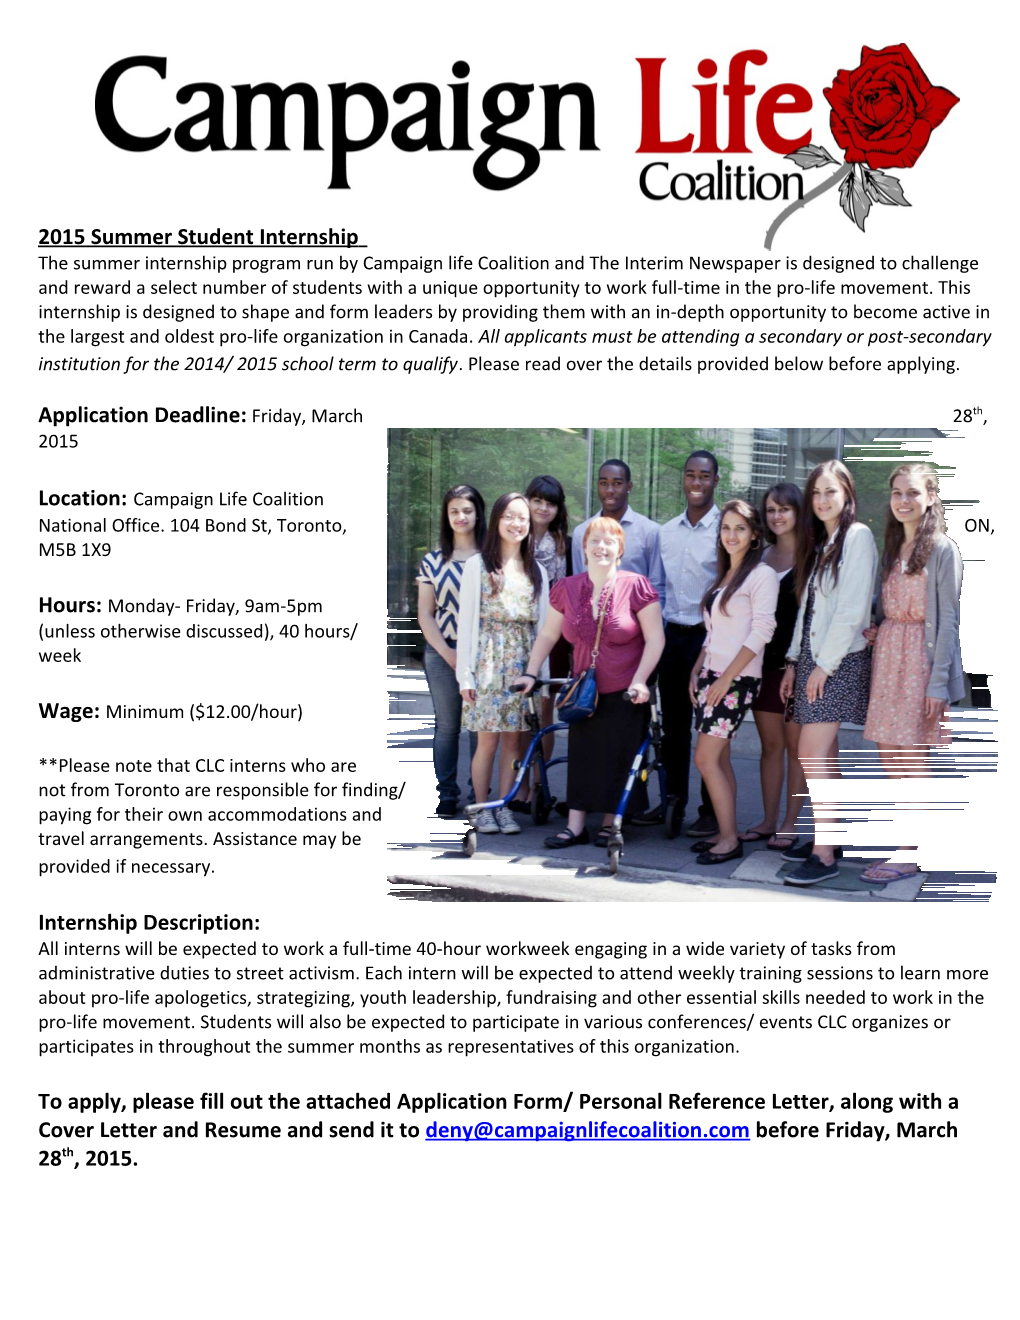 2015 Summer Student Internship the Summer Internship Program Run by Campaign Life Coalition